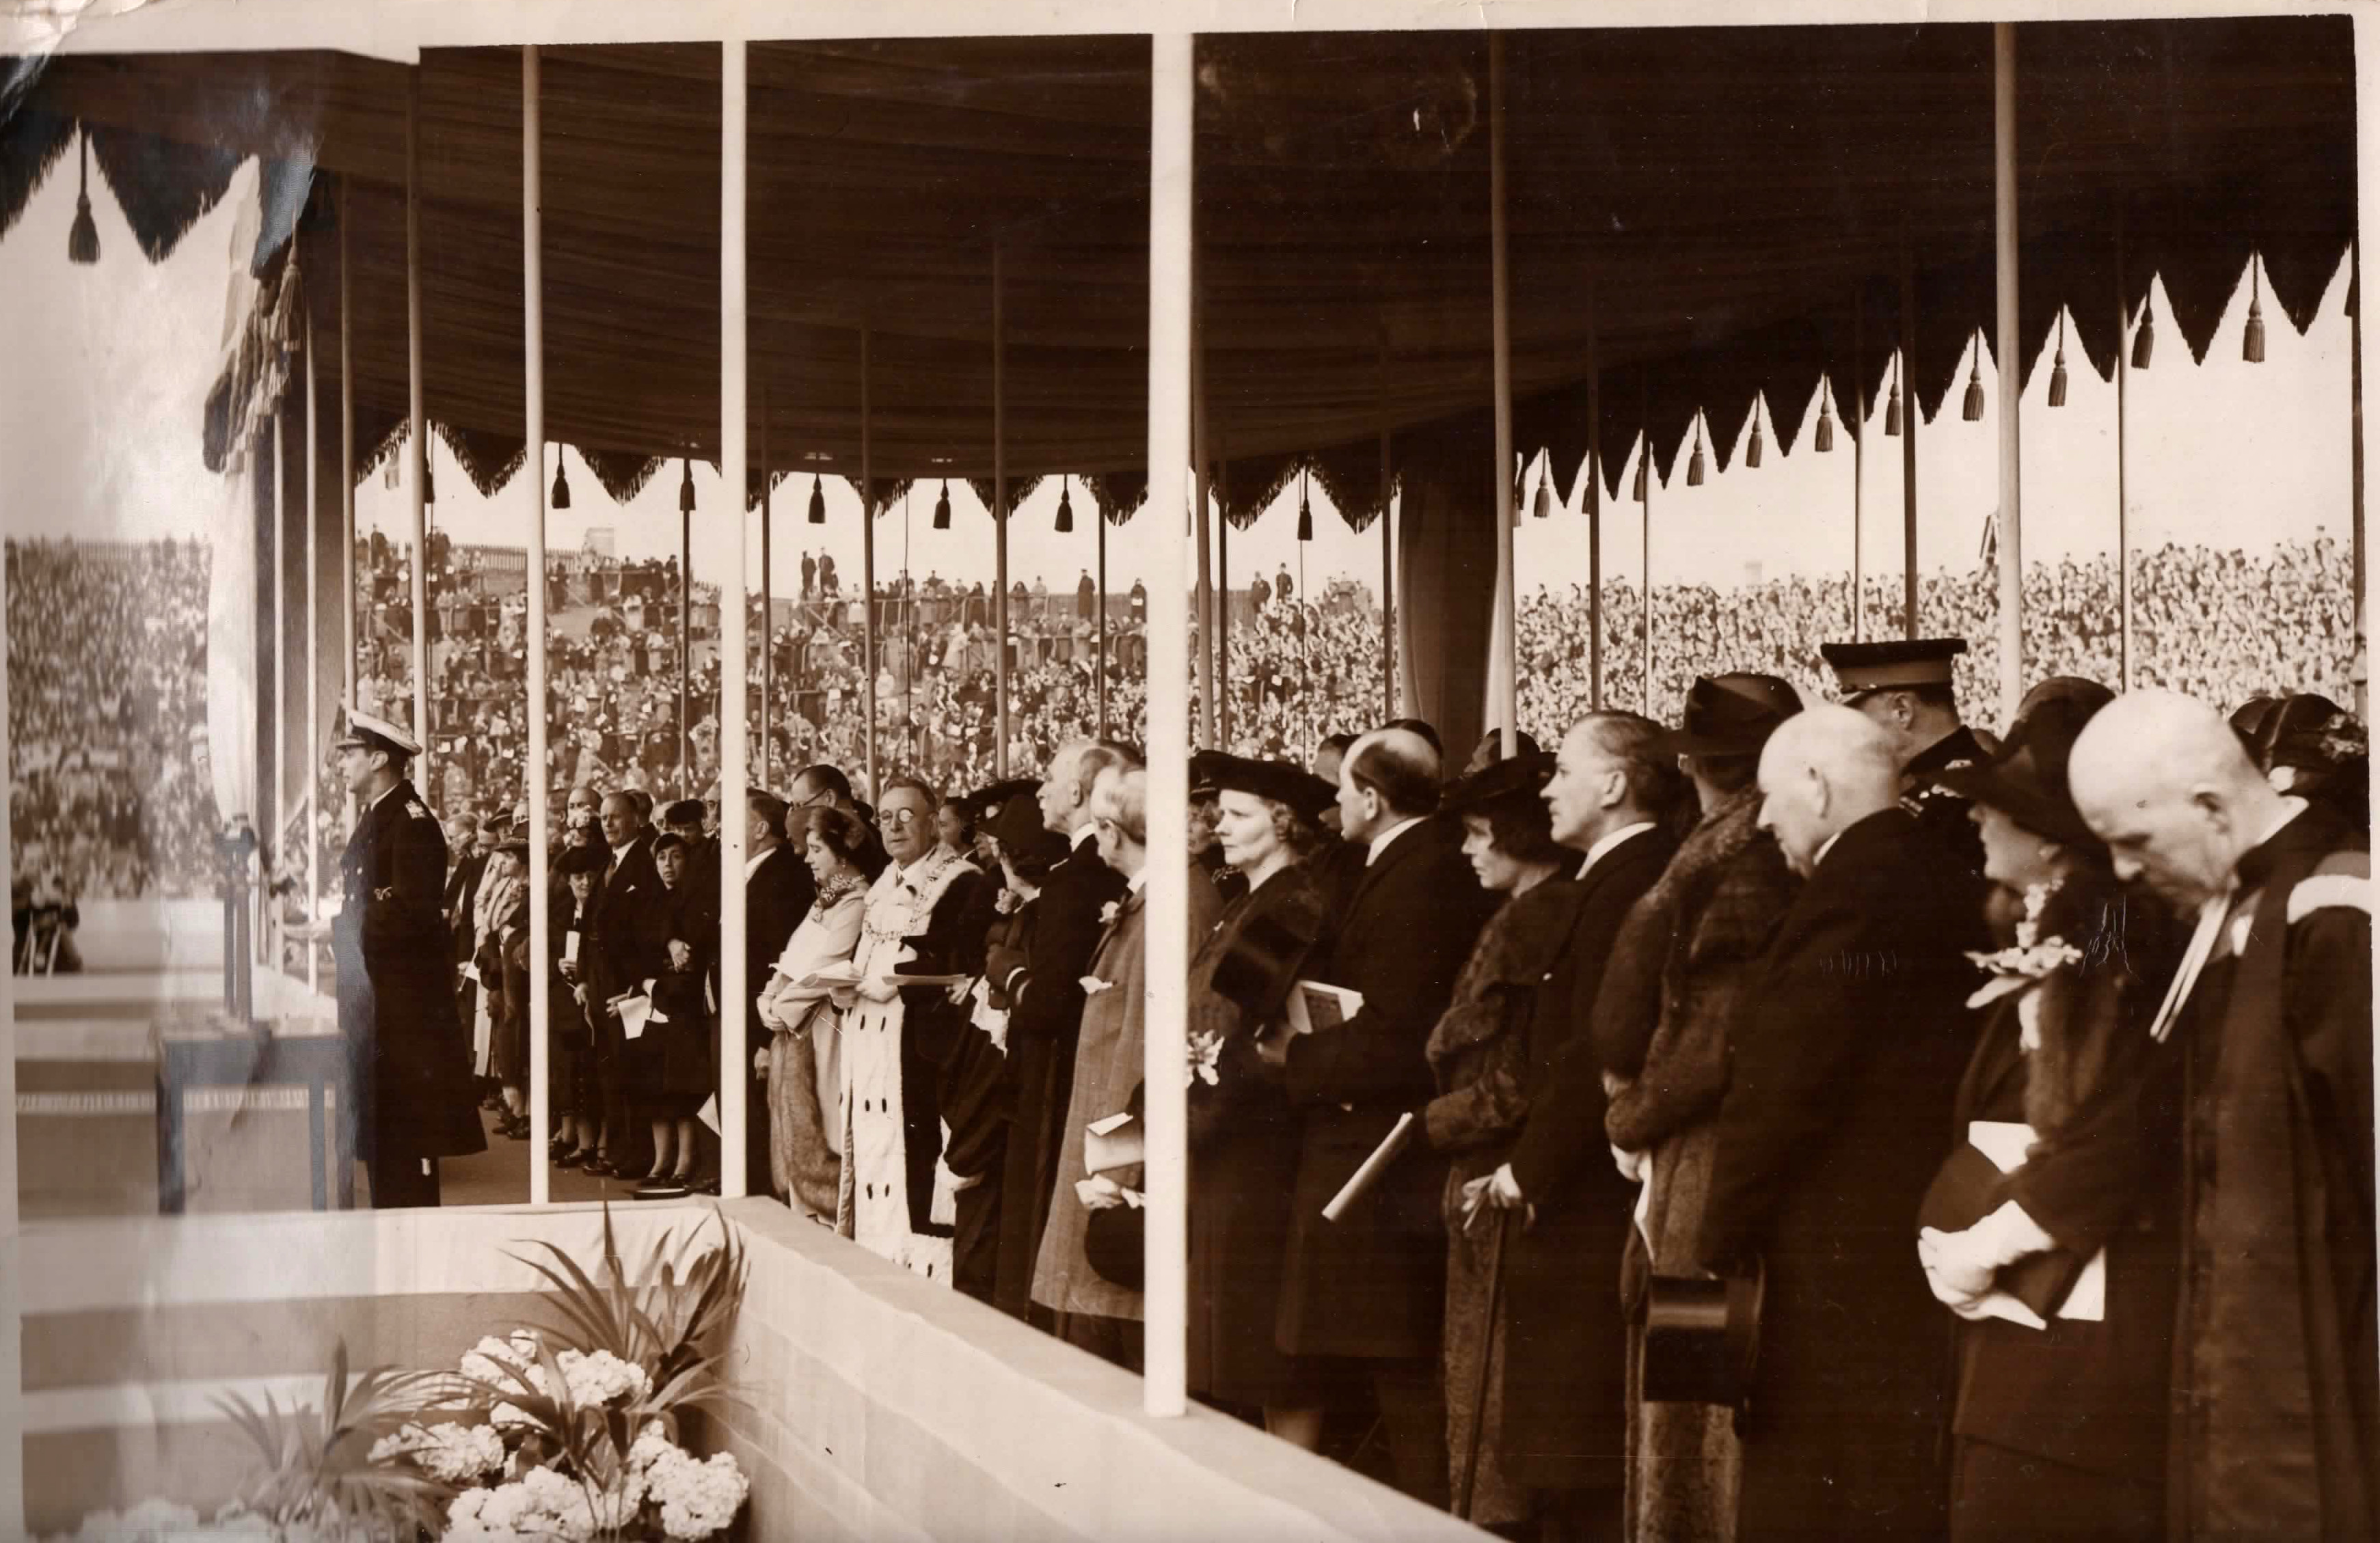 King George Open Speech at Glasgow Empire Exhibition 1937